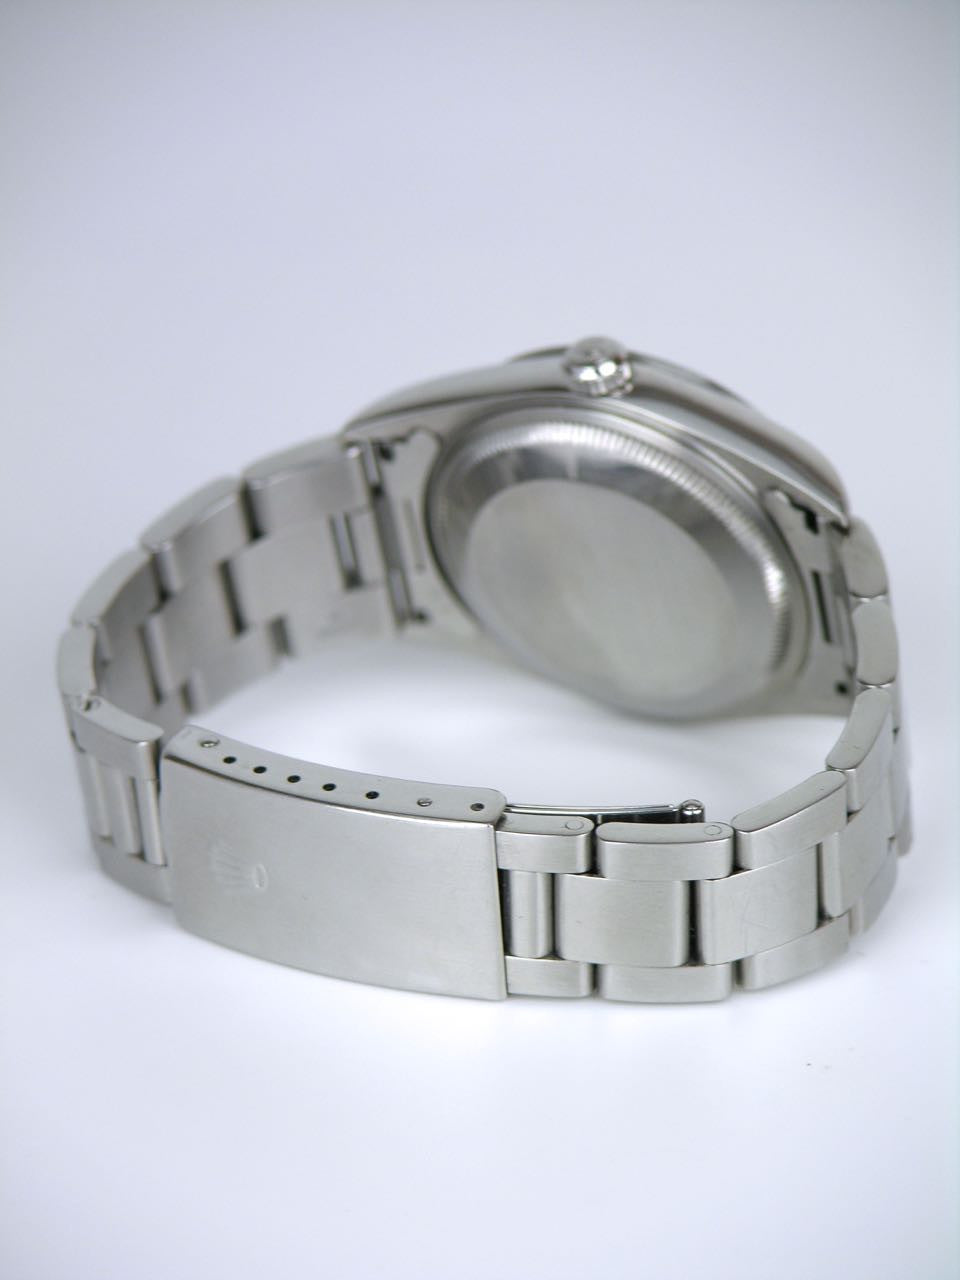 Rolex Oyster Perpetual Date Wristwatch - Ref 15200